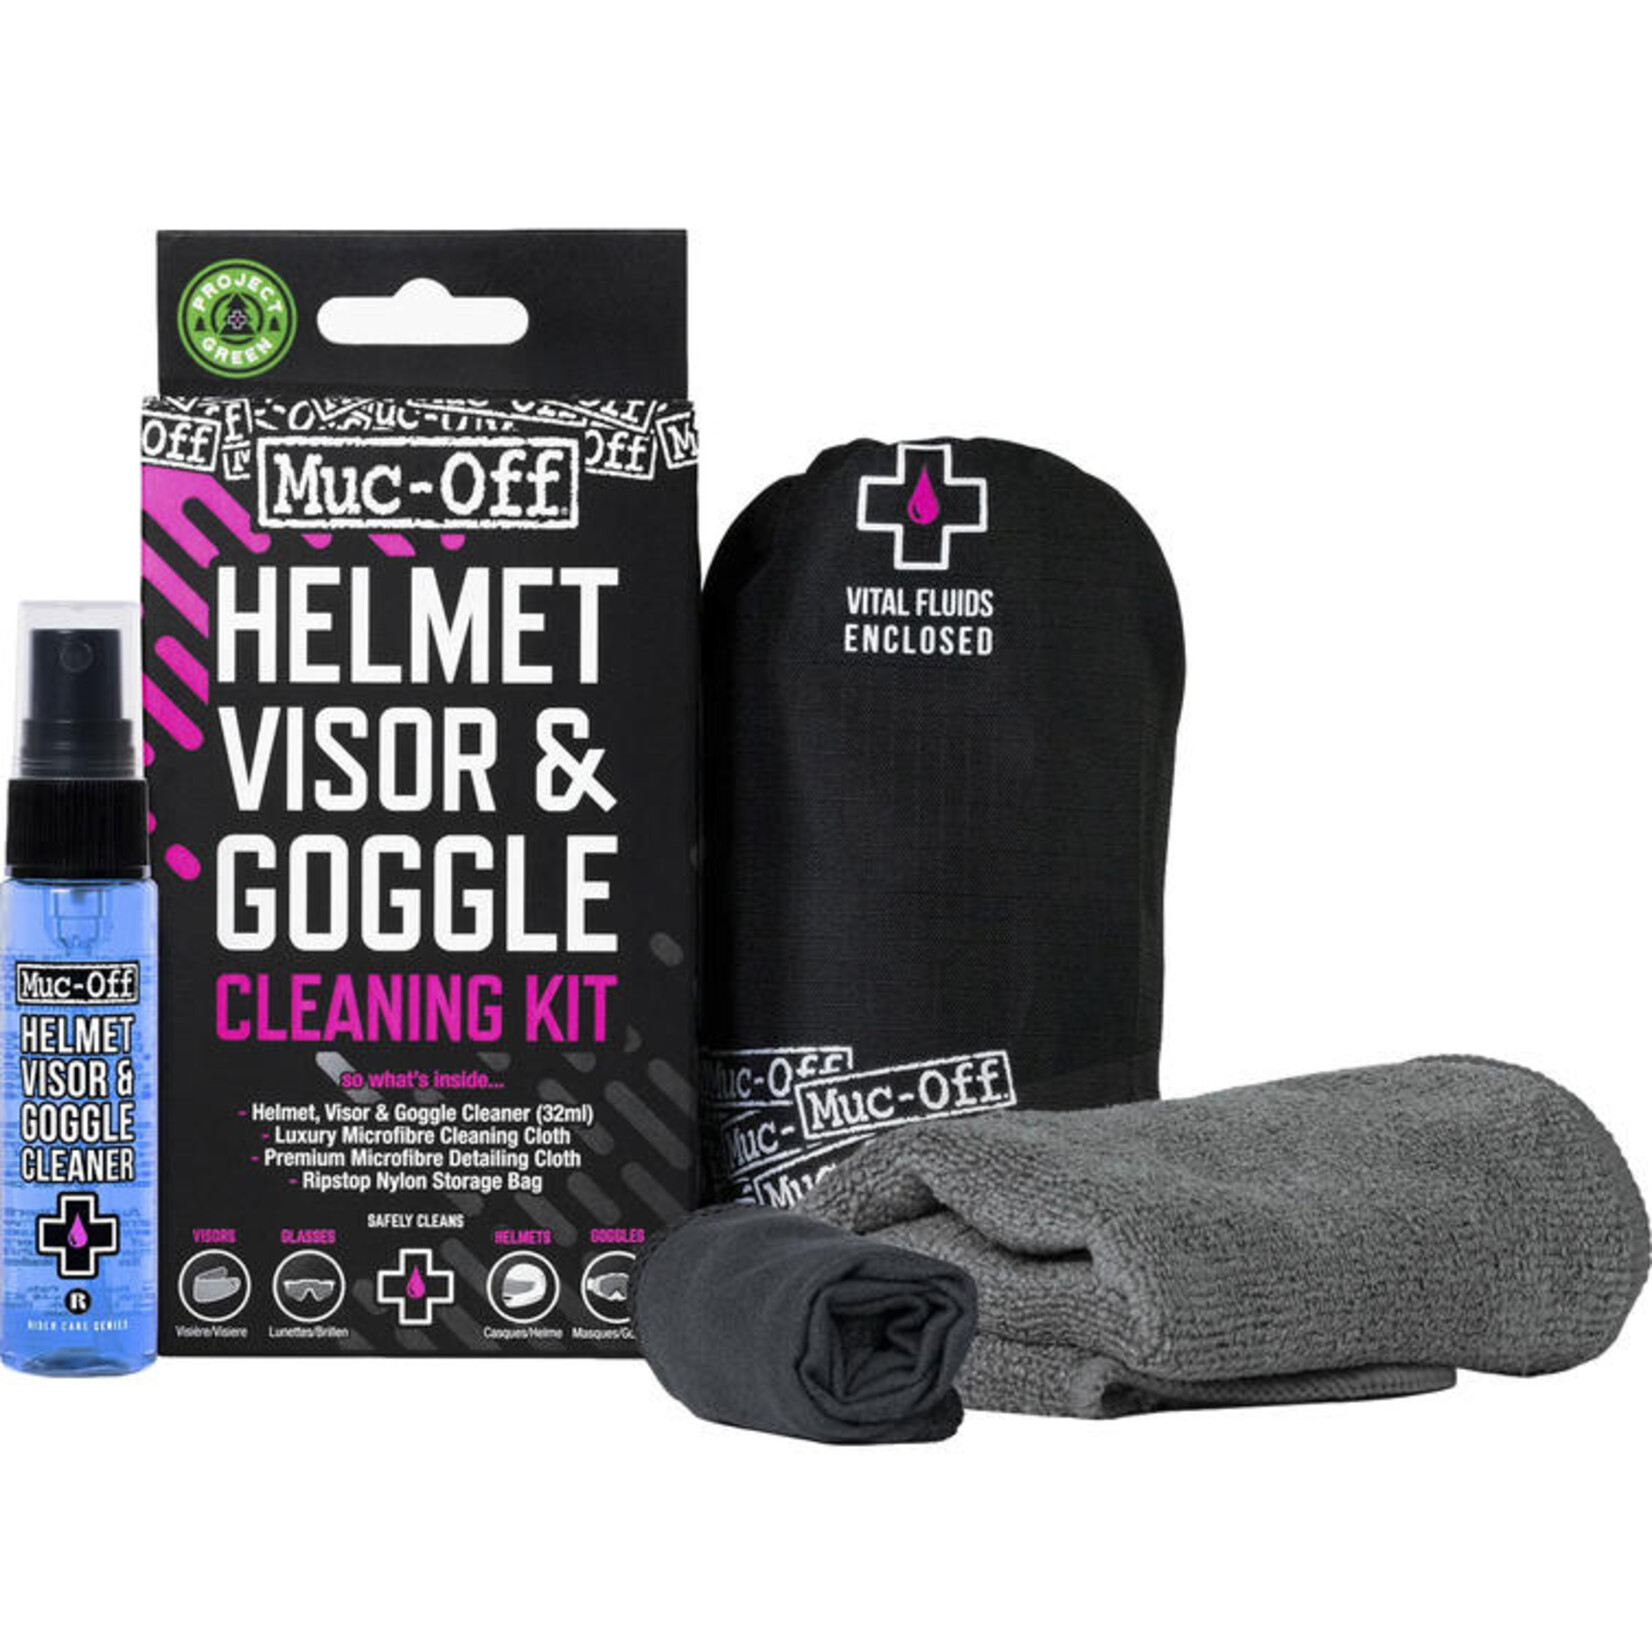 Muc Off Muc-Off Helmet Visor & Googgle Cleaning Kit